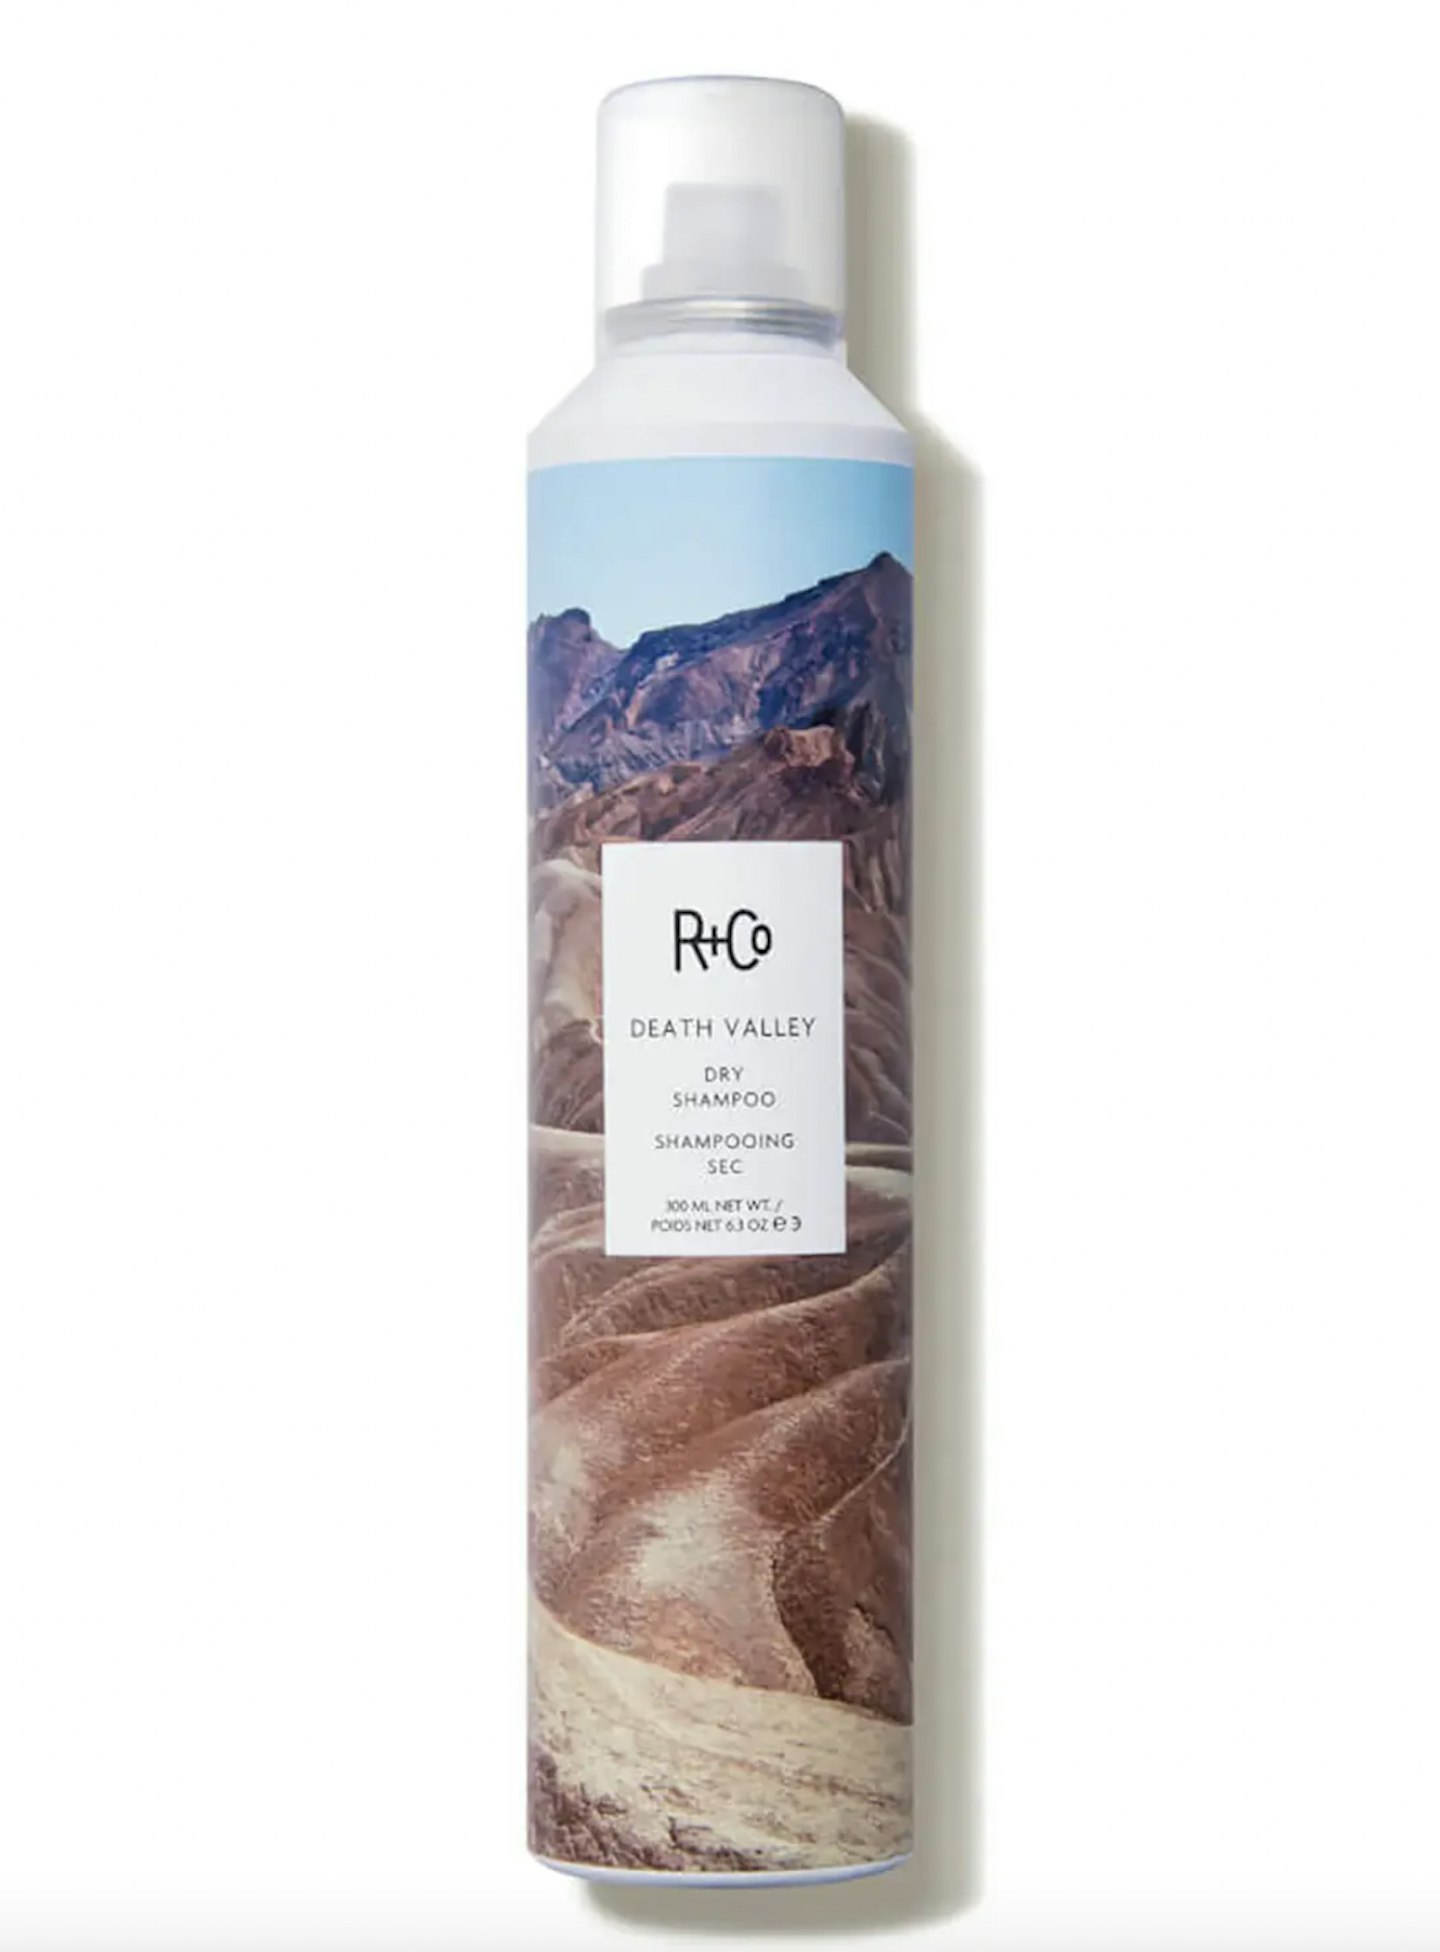 R+Co Death Valley Dry Shampoo, £24.50